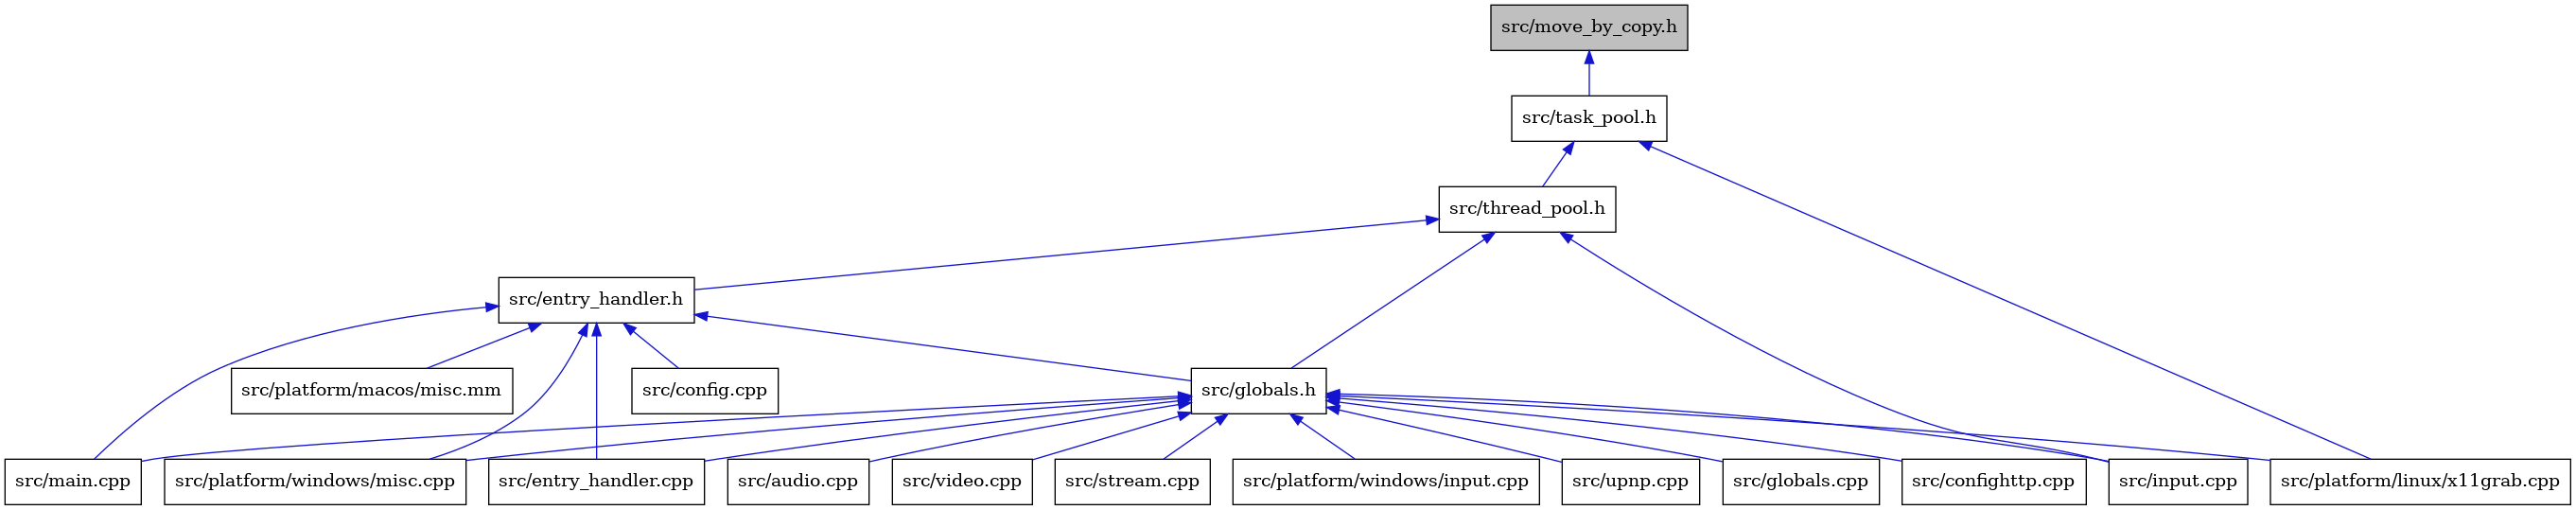 digraph {
    graph [bgcolor="#00000000"]
    node [shape=rectangle style=filled fillcolor="#FFFFFF" font=Helvetica padding=2]
    edge [color="#1414CE"]
    "8" [label="src/globals.h" tooltip="src/globals.h"]
    "16" [label="src/stream.cpp" tooltip="src/stream.cpp"]
    "1" [label="src/move_by_copy.h" tooltip="src/move_by_copy.h" fillcolor="#BFBFBF"]
    "7" [label="src/entry_handler.cpp" tooltip="src/entry_handler.cpp"]
    "14" [label="src/platform/windows/input.cpp" tooltip="src/platform/windows/input.cpp"]
    "17" [label="src/upnp.cpp" tooltip="src/upnp.cpp"]
    "12" [label="src/input.cpp" tooltip="src/input.cpp"]
    "3" [label="src/platform/linux/x11grab.cpp" tooltip="src/platform/linux/x11grab.cpp"]
    "6" [label="src/config.cpp" tooltip="src/config.cpp"]
    "11" [label="src/globals.cpp" tooltip="src/globals.cpp"]
    "13" [label="src/main.cpp" tooltip="src/main.cpp"]
    "5" [label="src/entry_handler.h" tooltip="src/entry_handler.h"]
    "19" [label="src/platform/macos/misc.mm" tooltip="src/platform/macos/misc.mm"]
    "15" [label="src/platform/windows/misc.cpp" tooltip="src/platform/windows/misc.cpp"]
    "10" [label="src/confighttp.cpp" tooltip="src/confighttp.cpp"]
    "2" [label="src/task_pool.h" tooltip="src/task_pool.h"]
    "4" [label="src/thread_pool.h" tooltip="src/thread_pool.h"]
    "9" [label="src/audio.cpp" tooltip="src/audio.cpp"]
    "18" [label="src/video.cpp" tooltip="src/video.cpp"]
    "8" -> "9" [dir=back tooltip="include"]
    "8" -> "10" [dir=back tooltip="include"]
    "8" -> "7" [dir=back tooltip="include"]
    "8" -> "11" [dir=back tooltip="include"]
    "8" -> "12" [dir=back tooltip="include"]
    "8" -> "13" [dir=back tooltip="include"]
    "8" -> "3" [dir=back tooltip="include"]
    "8" -> "14" [dir=back tooltip="include"]
    "8" -> "15" [dir=back tooltip="include"]
    "8" -> "16" [dir=back tooltip="include"]
    "8" -> "17" [dir=back tooltip="include"]
    "8" -> "18" [dir=back tooltip="include"]
    "1" -> "2" [dir=back tooltip="include"]
    "5" -> "6" [dir=back tooltip="include"]
    "5" -> "7" [dir=back tooltip="include"]
    "5" -> "8" [dir=back tooltip="include"]
    "5" -> "13" [dir=back tooltip="include"]
    "5" -> "19" [dir=back tooltip="include"]
    "5" -> "15" [dir=back tooltip="include"]
    "2" -> "3" [dir=back tooltip="include"]
    "2" -> "4" [dir=back tooltip="include"]
    "4" -> "5" [dir=back tooltip="include"]
    "4" -> "8" [dir=back tooltip="include"]
    "4" -> "12" [dir=back tooltip="include"]
}